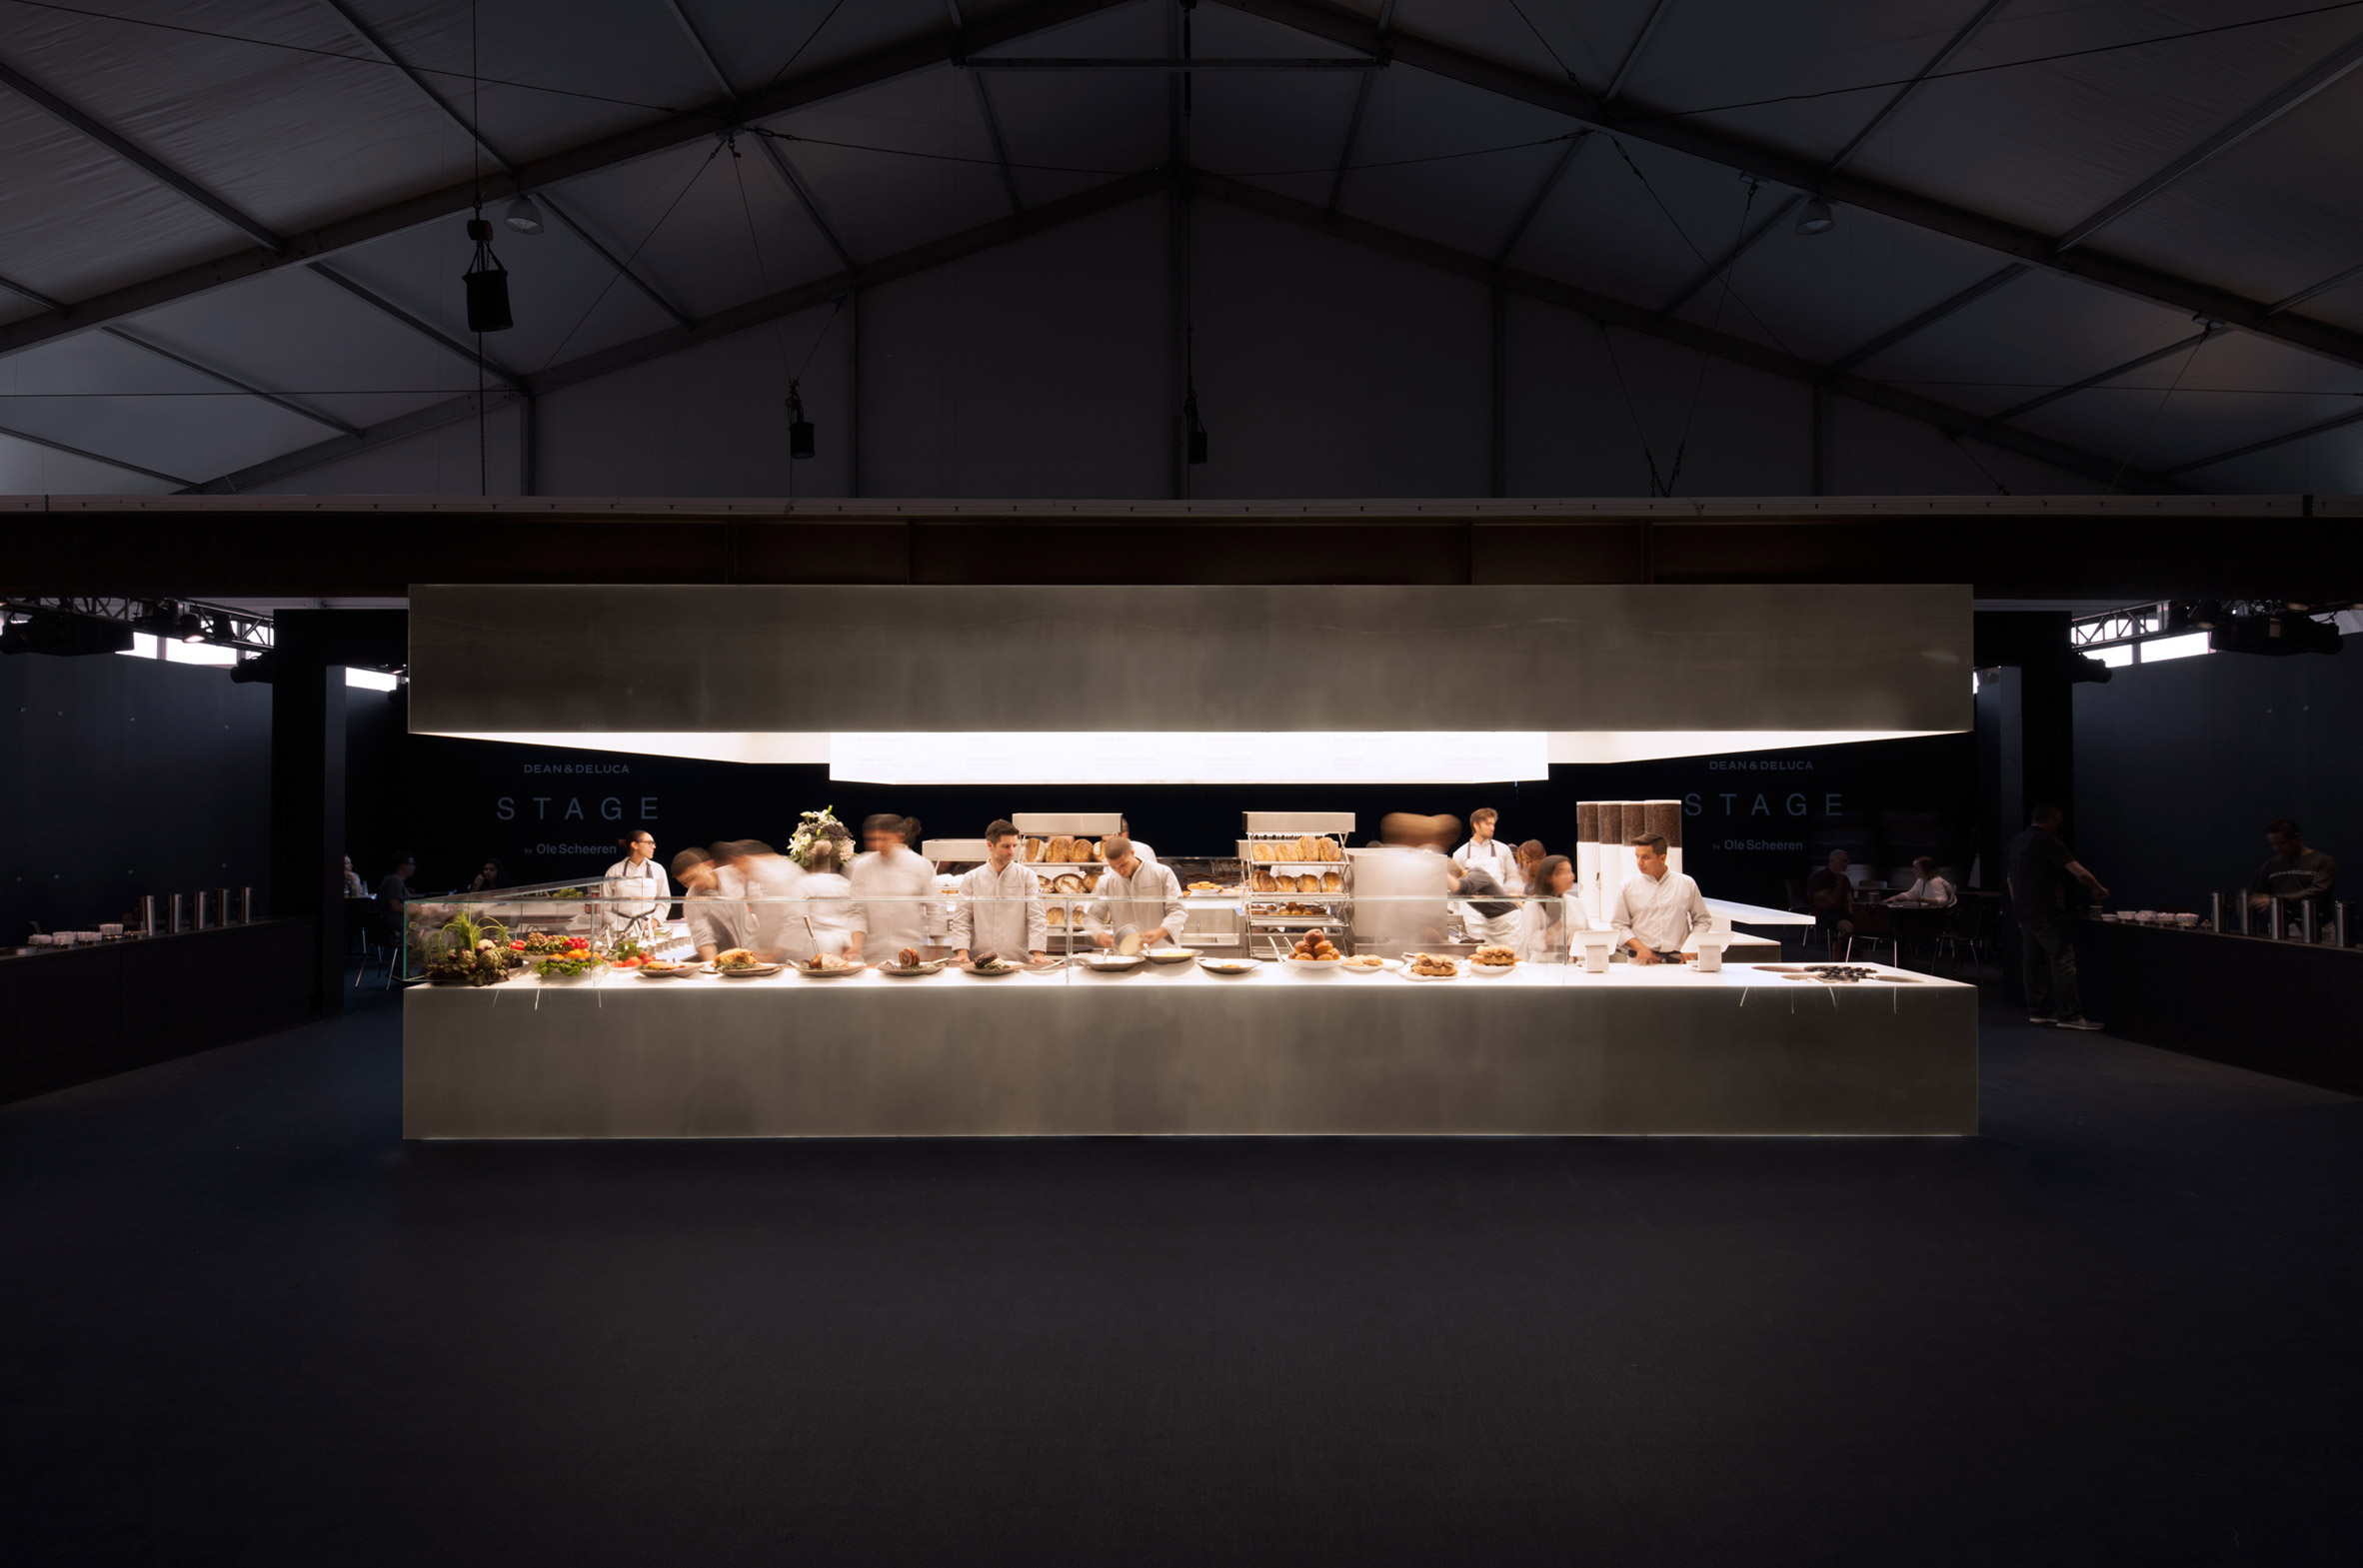 Dean & DeLuca launches fast-food concept based on Ole Scheeren kitchen design